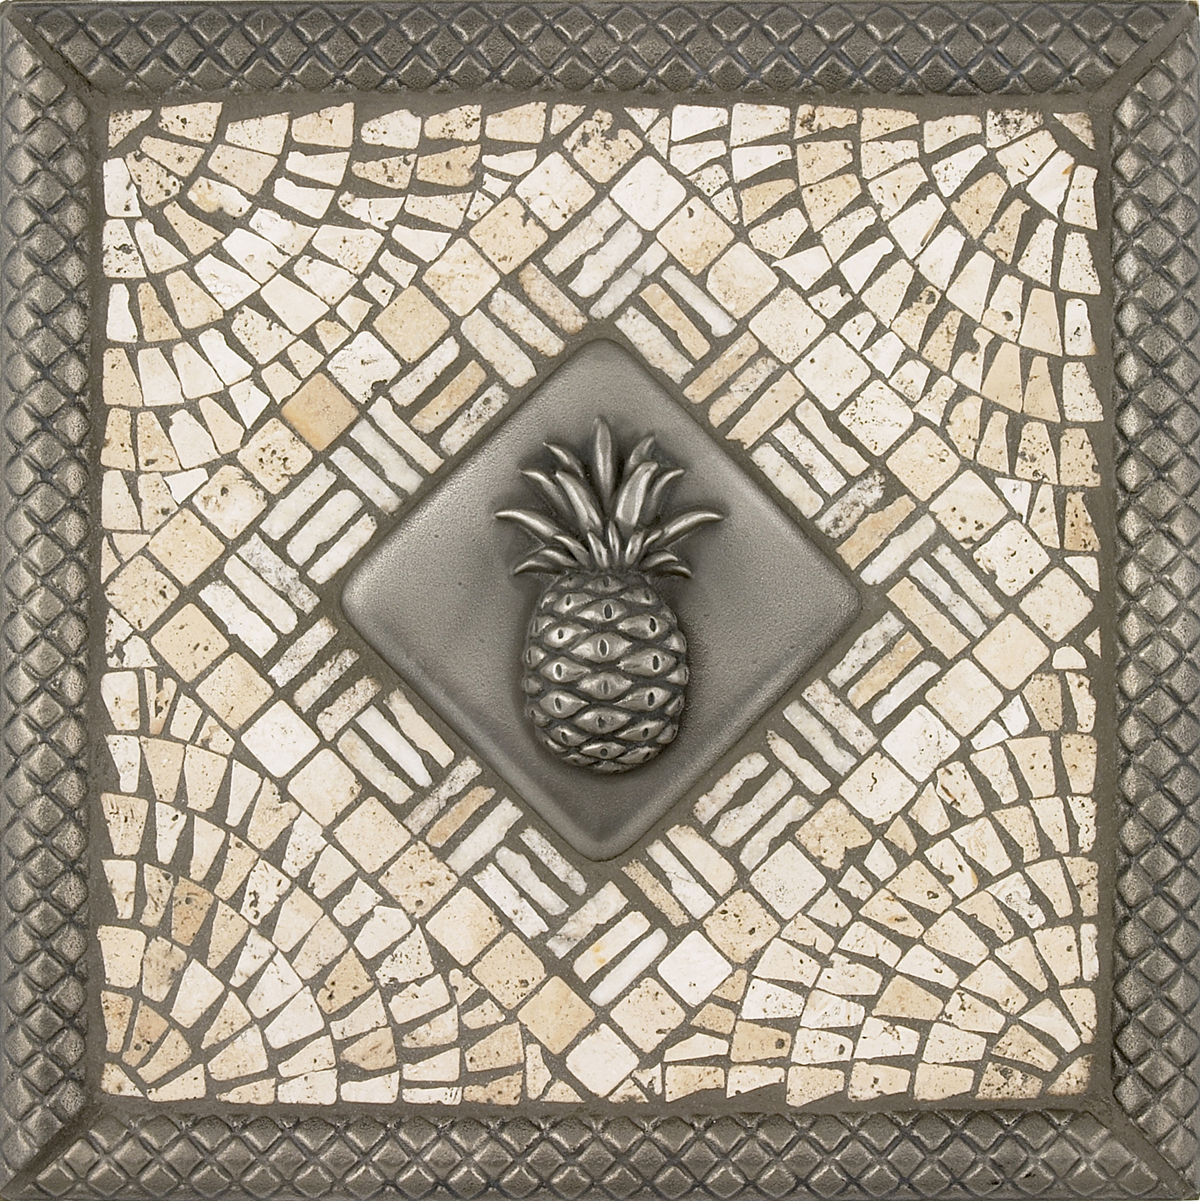 Metal Pineapple Mosaic Tile Backsplash Medallion 12 inches